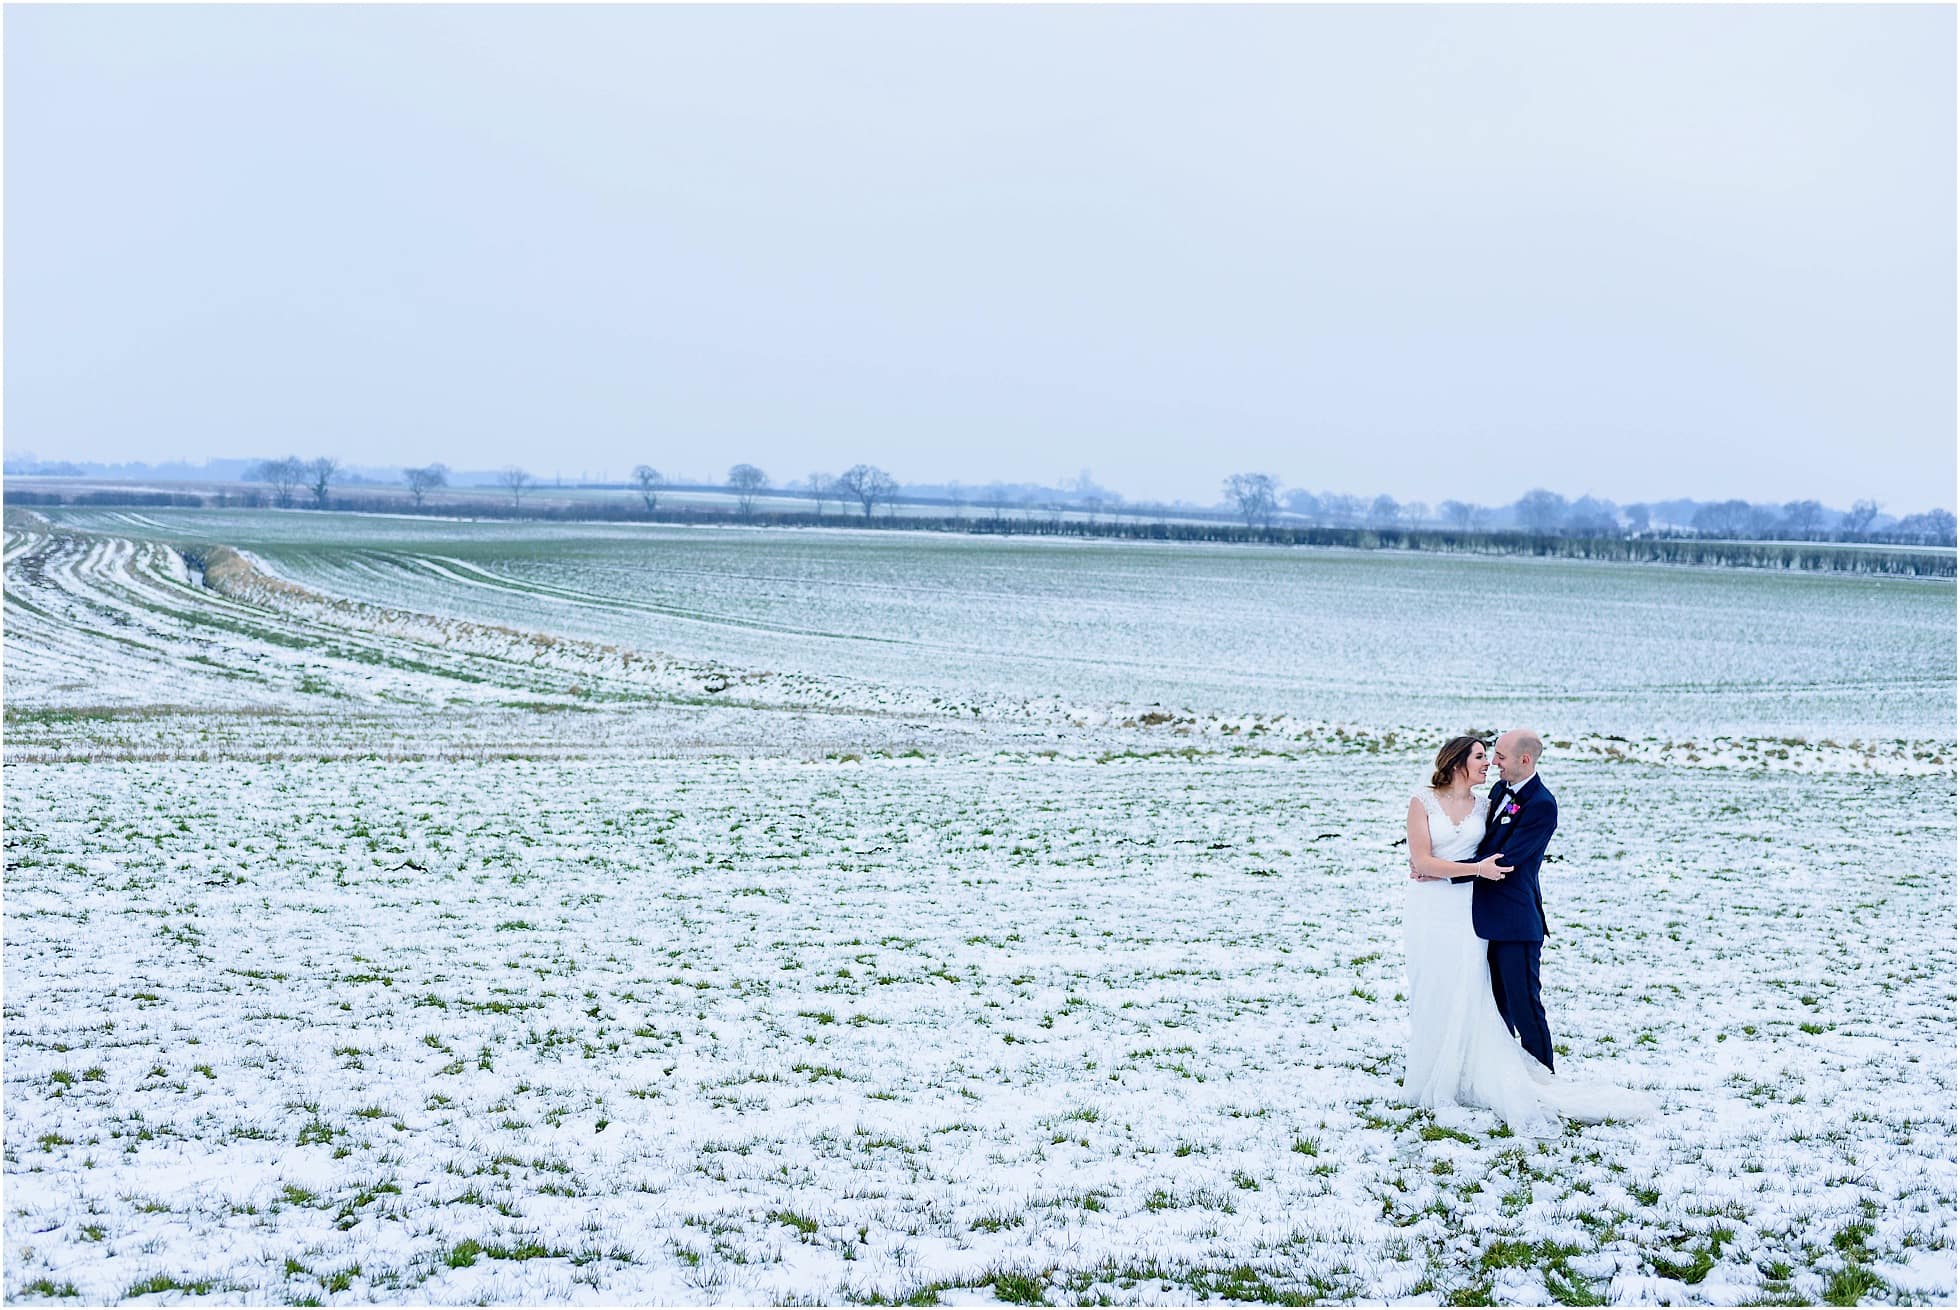 Epic snowy wedding photography